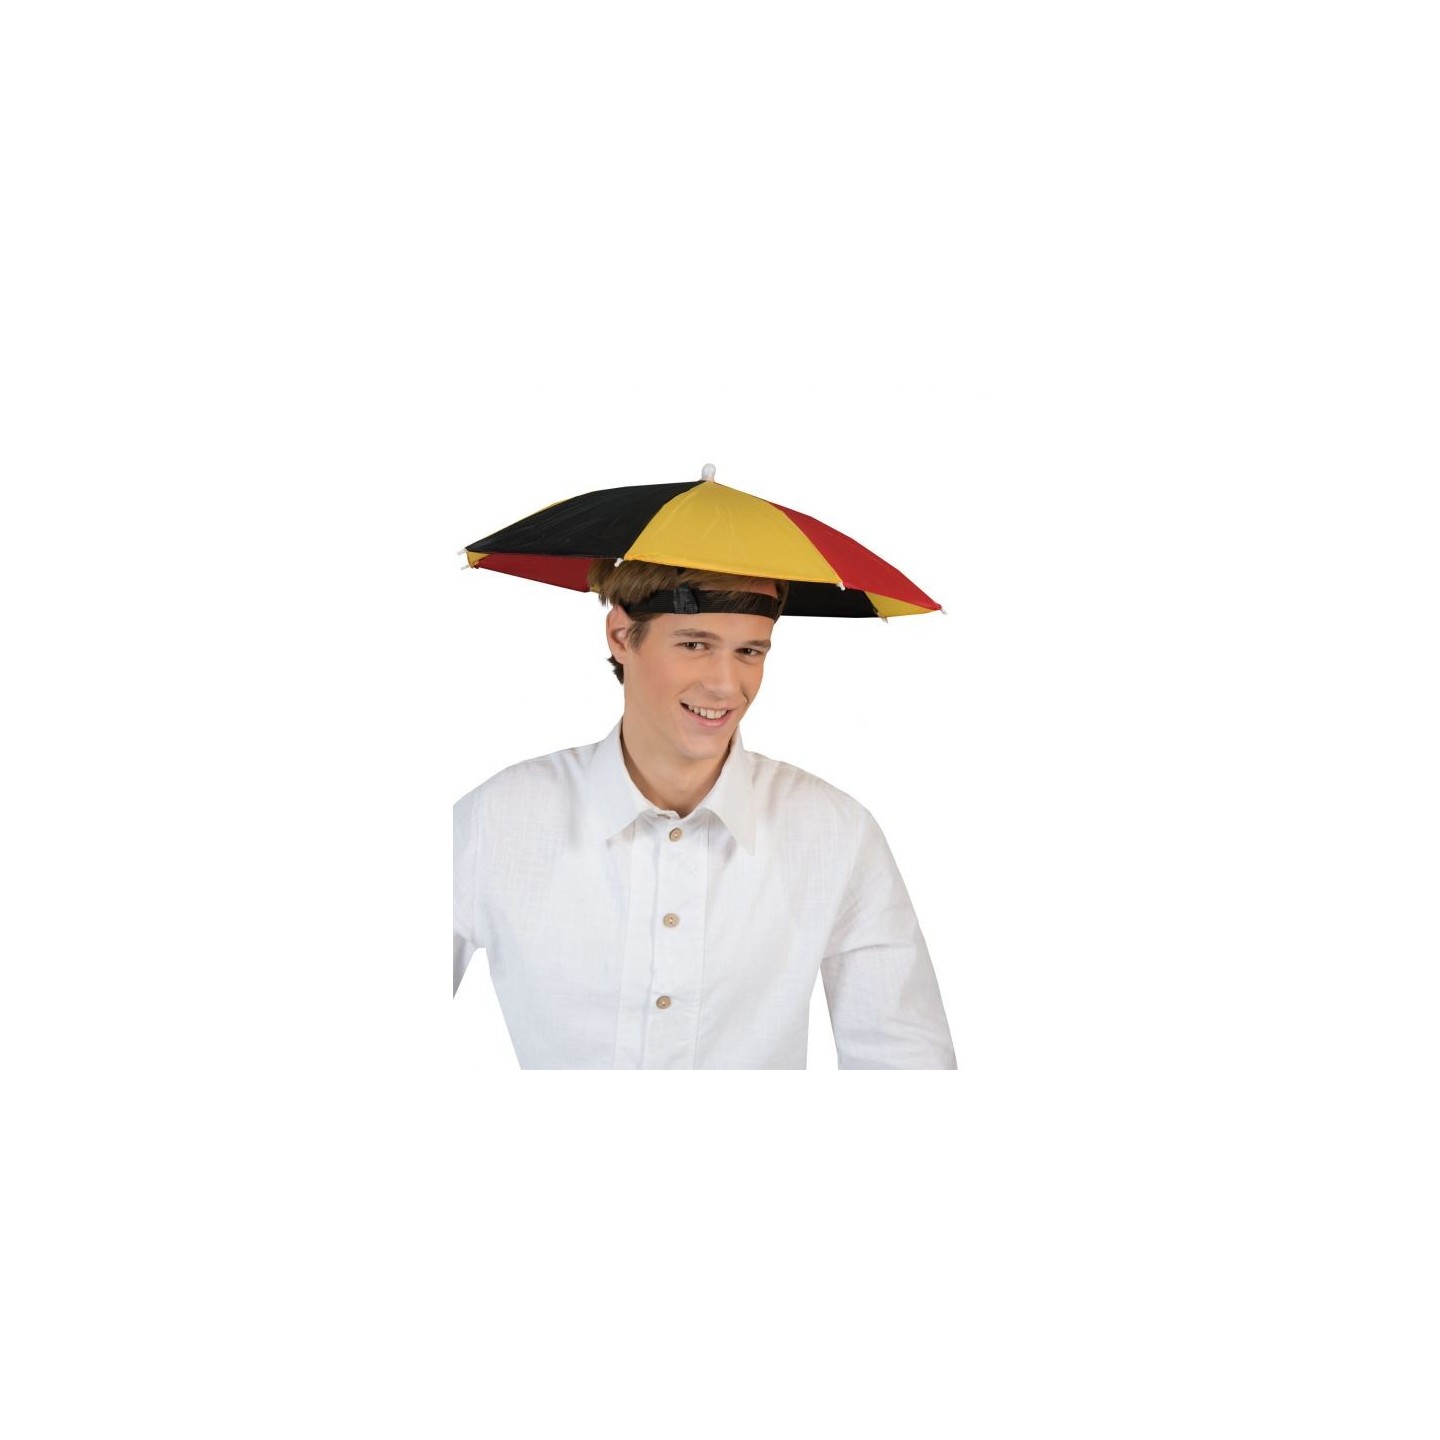 Paraplu hoed België supporter zwart-geel-rood fanartikelen 